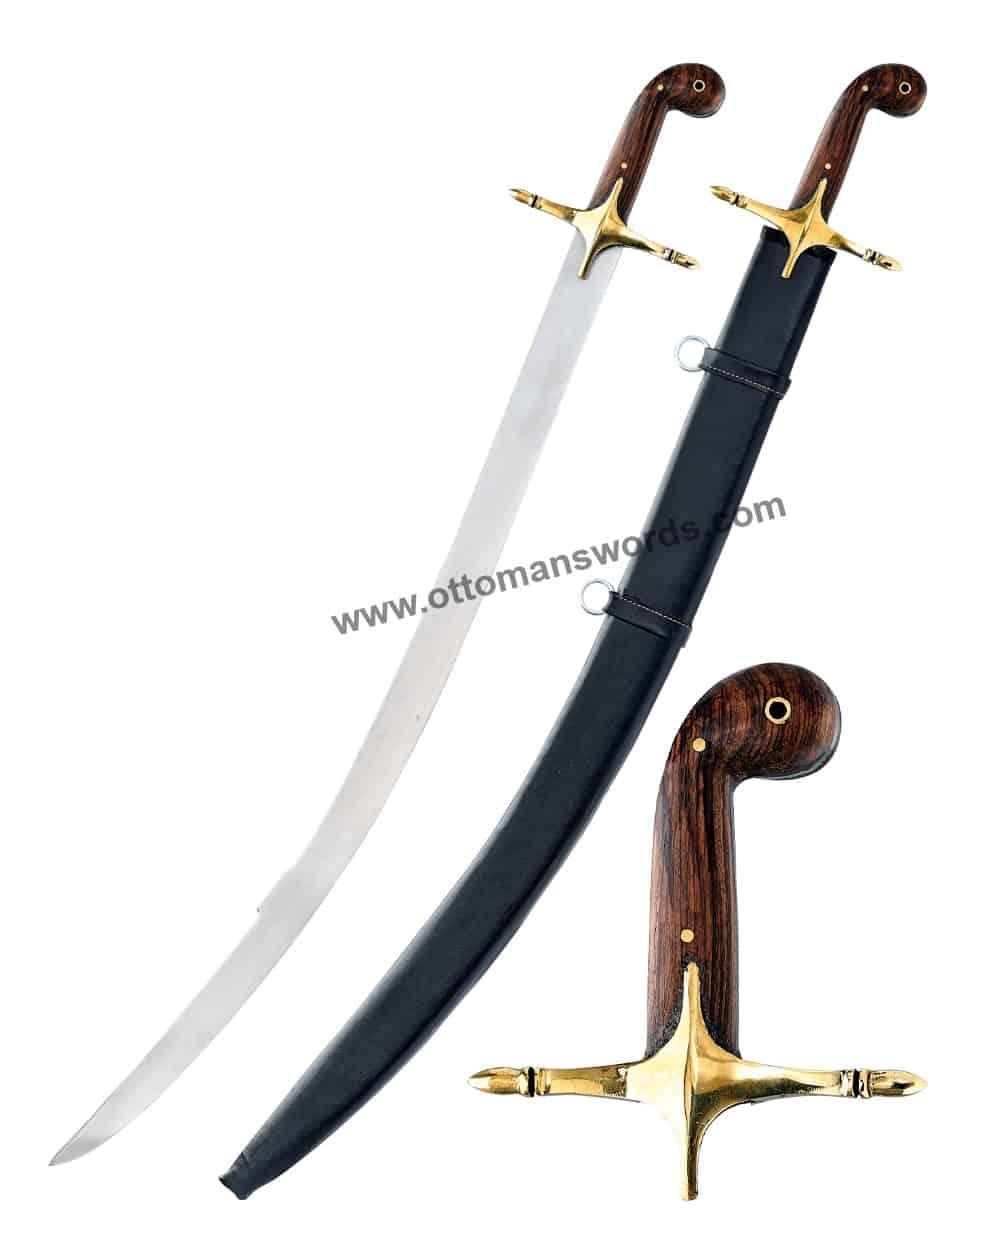 Ottoman Kilij Yataghan Sword